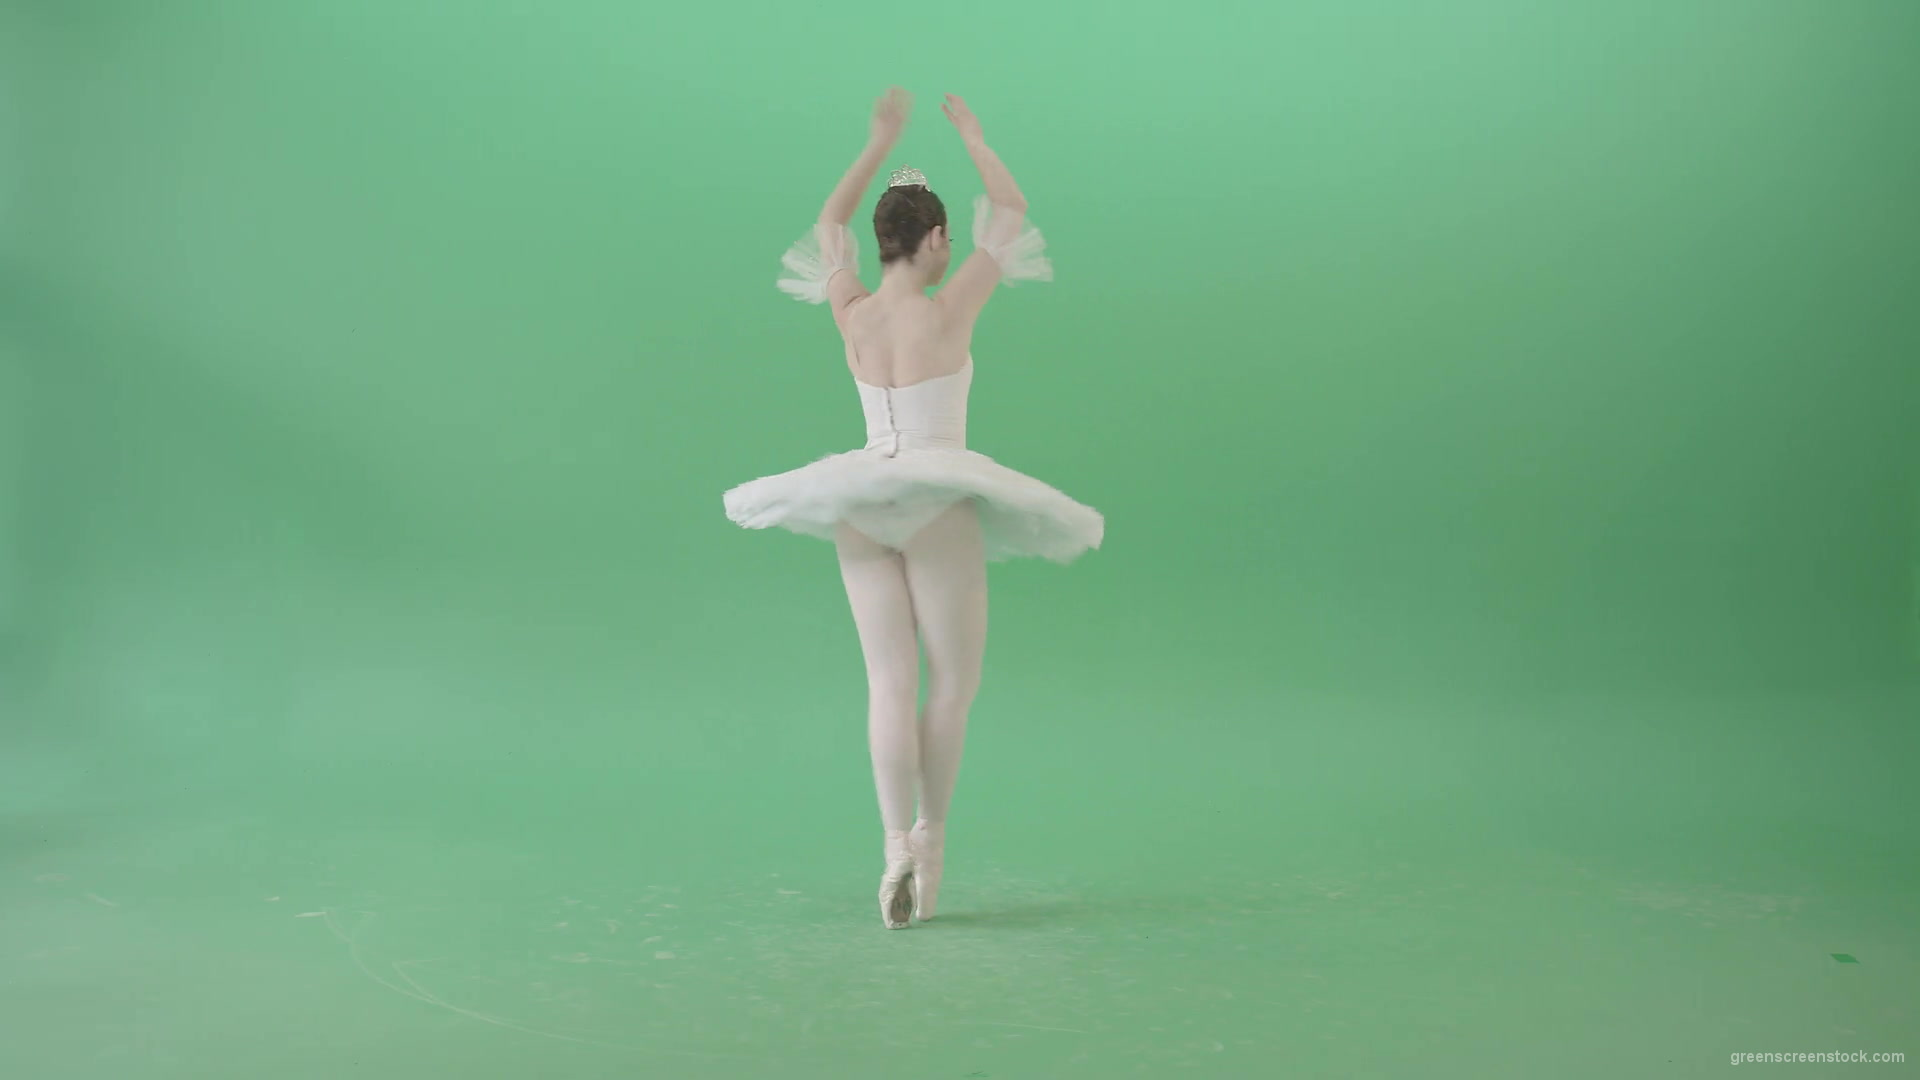 Girl-in-ballet-white-dress-performs-in-green-screen-studio-spinning-elegant-4K-Video-Footage-1920_002 Green Screen Stock